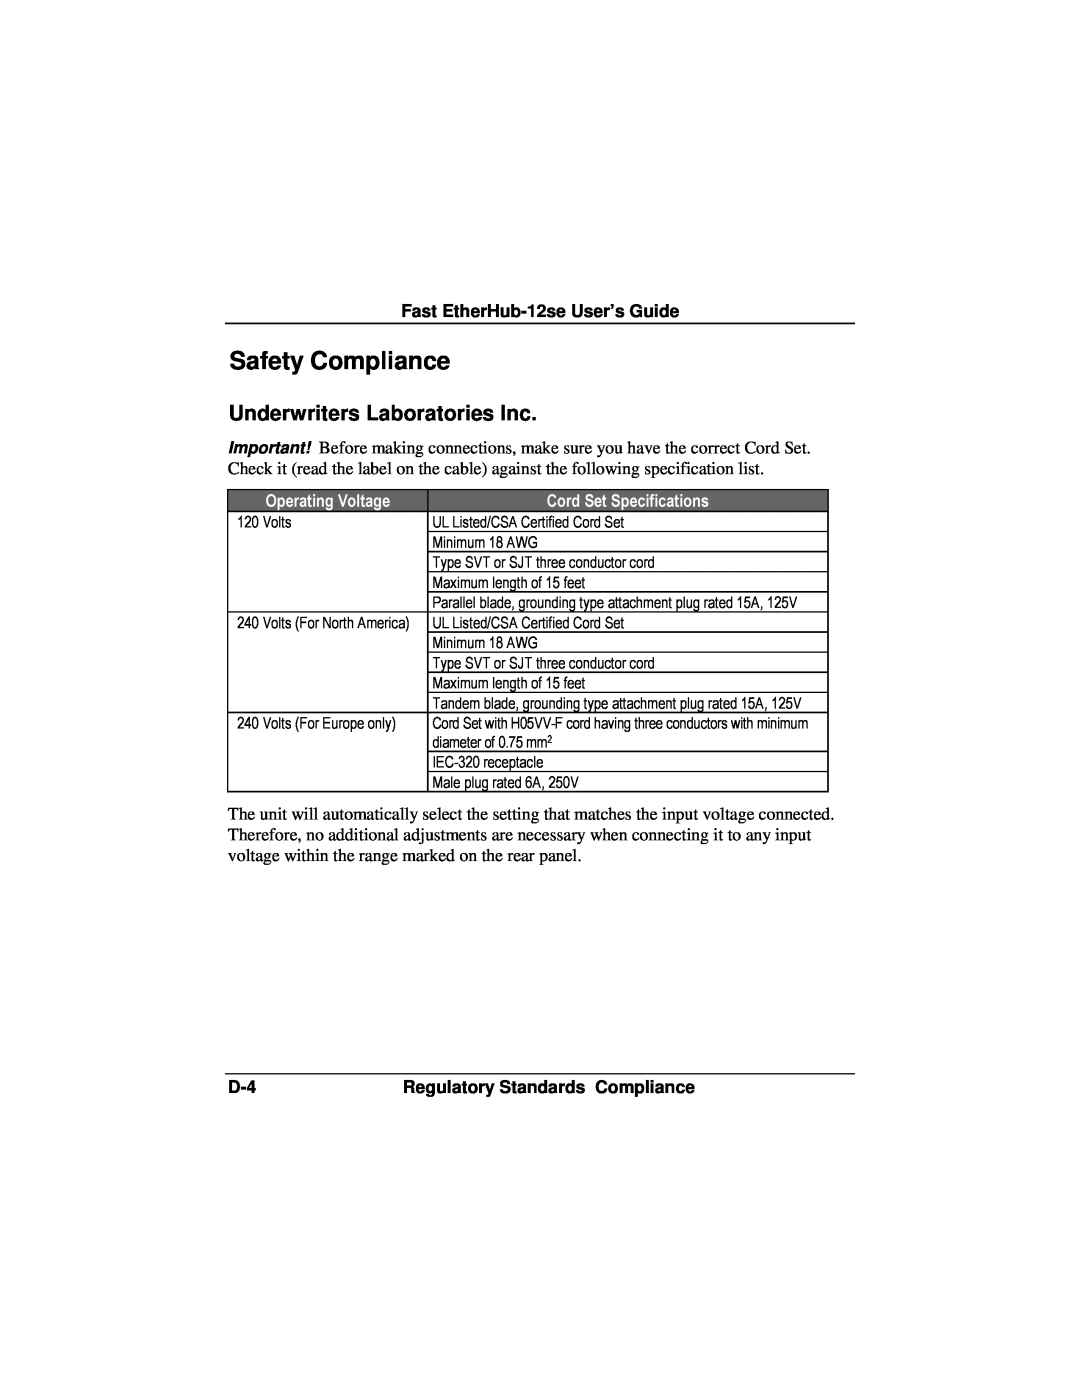 Accton Technology manual Safety Compliance, Fast EtherHub-12se User’s Guide, 2SHUDWLQJ9ROWDJH, RUG6HW6SHFLILFDWLRQV 